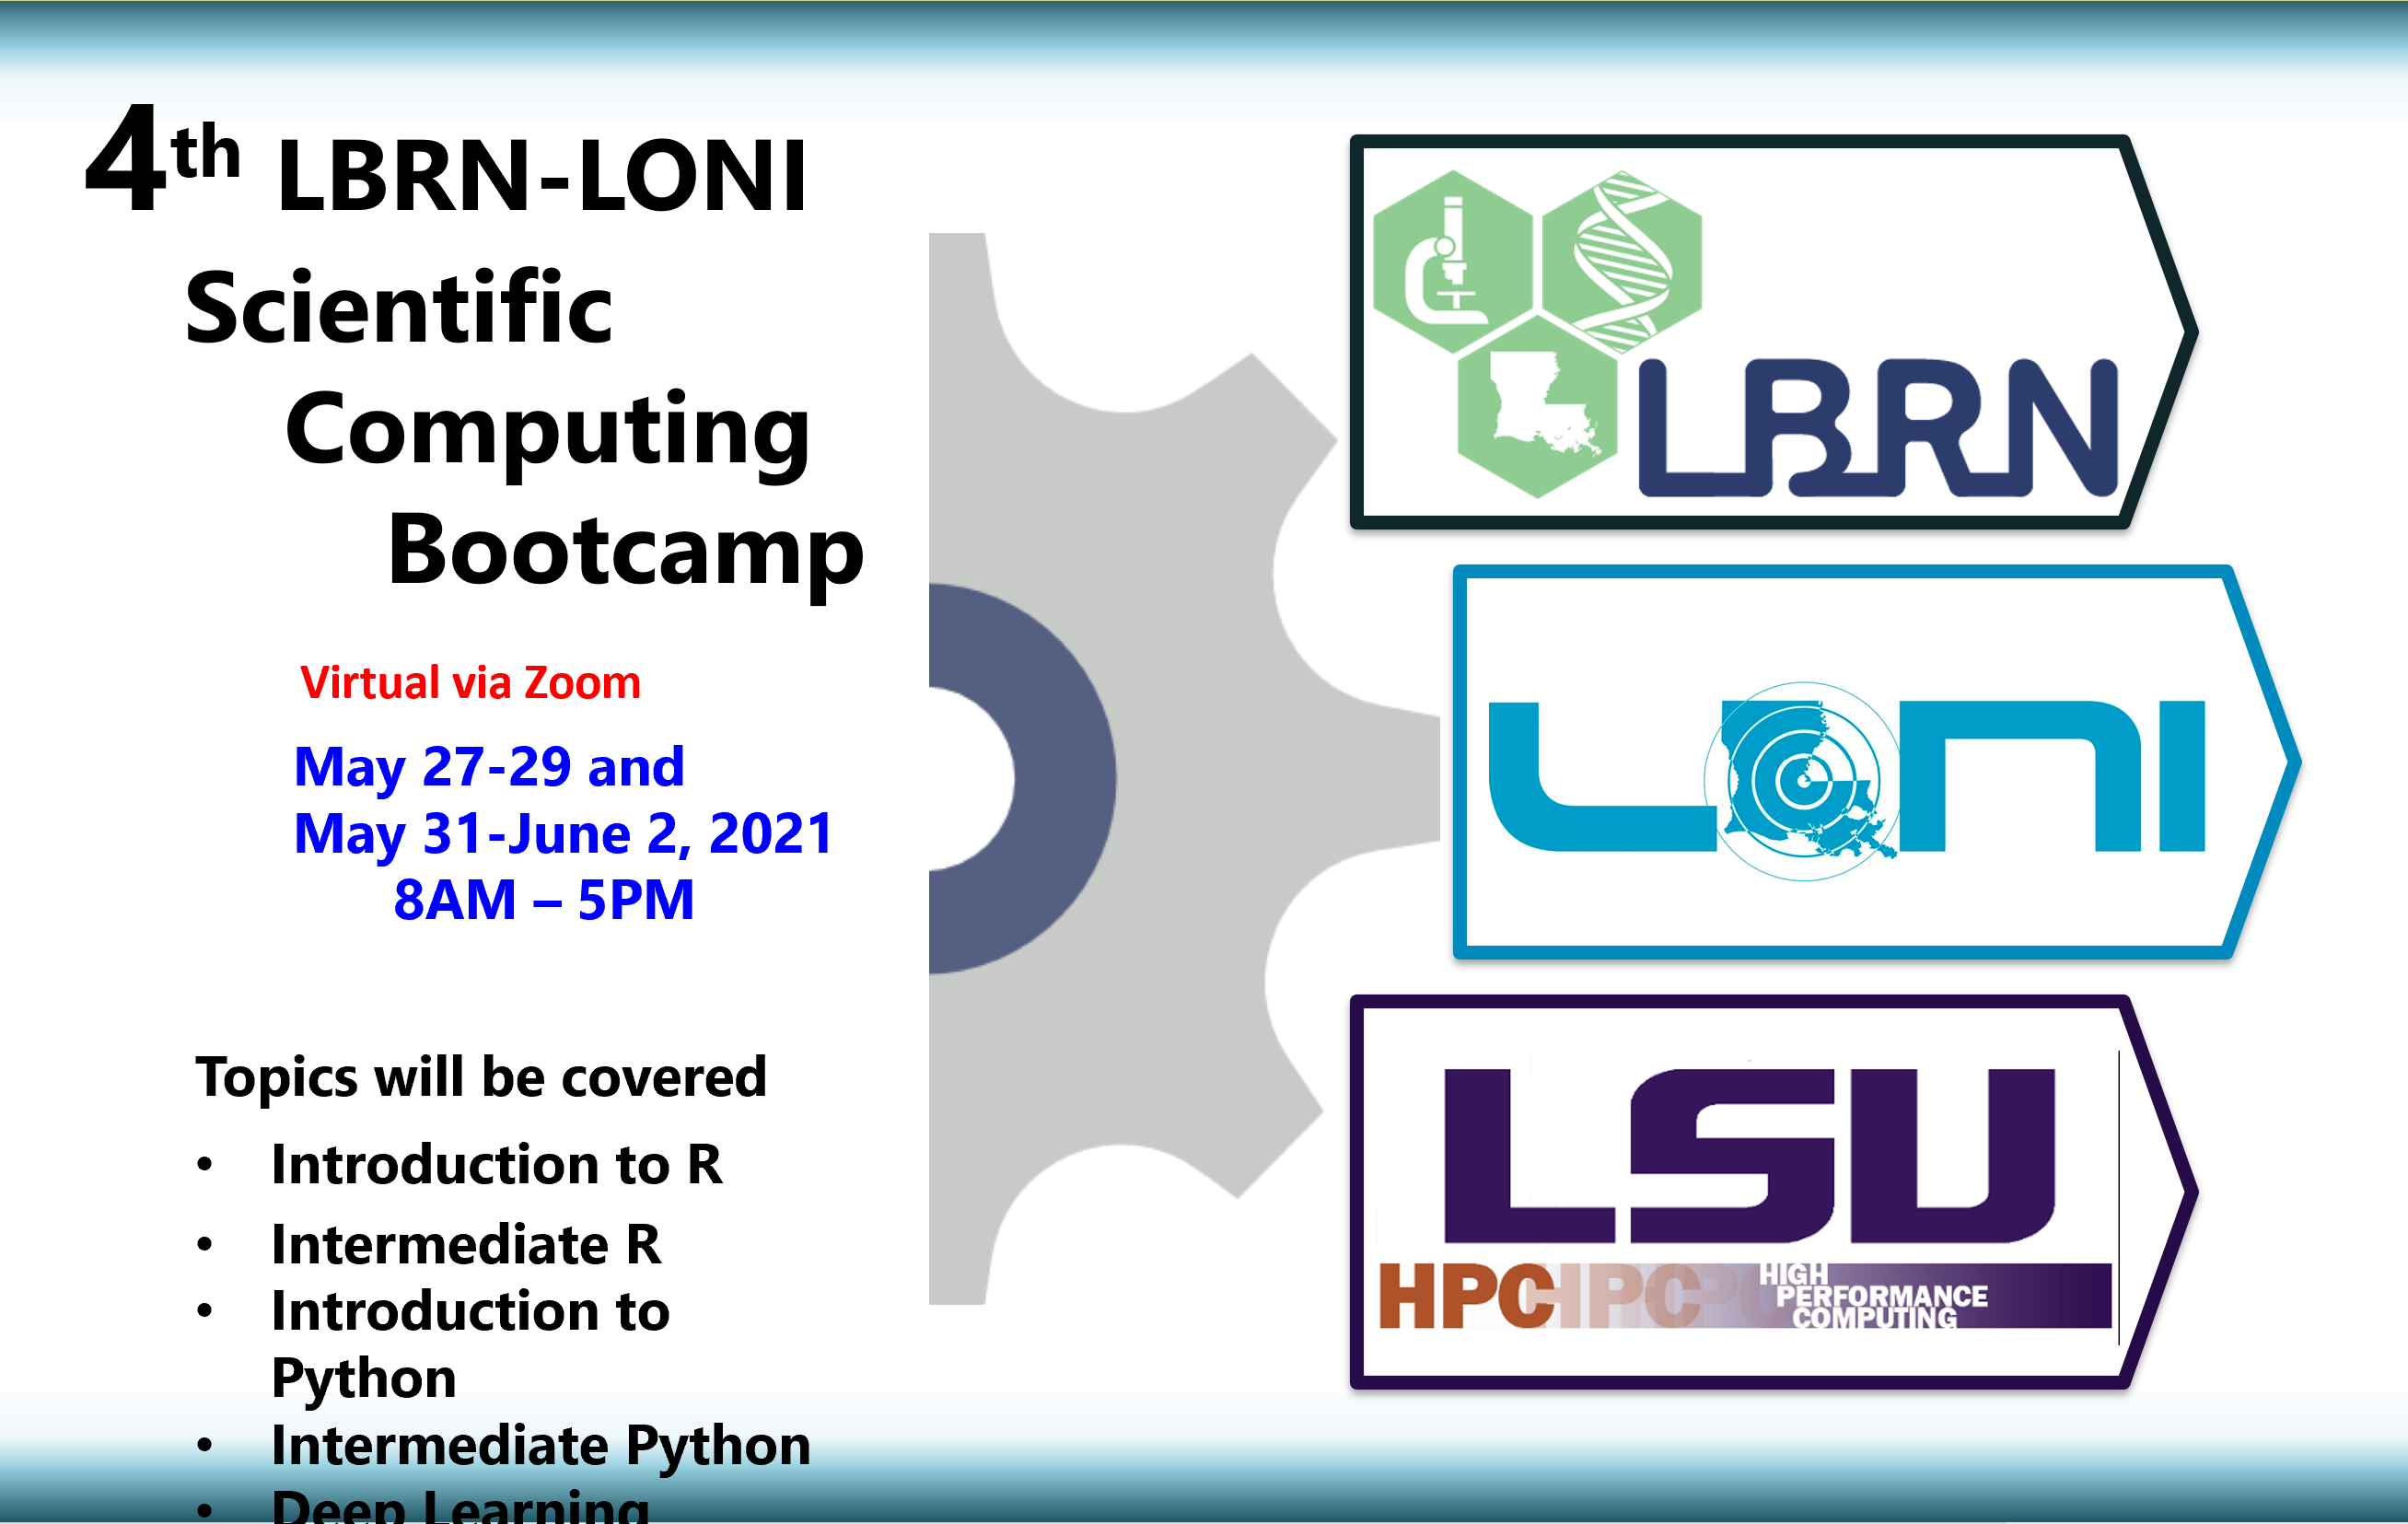 LBRN-LONI Scientific Computing Bootcamp Flyer